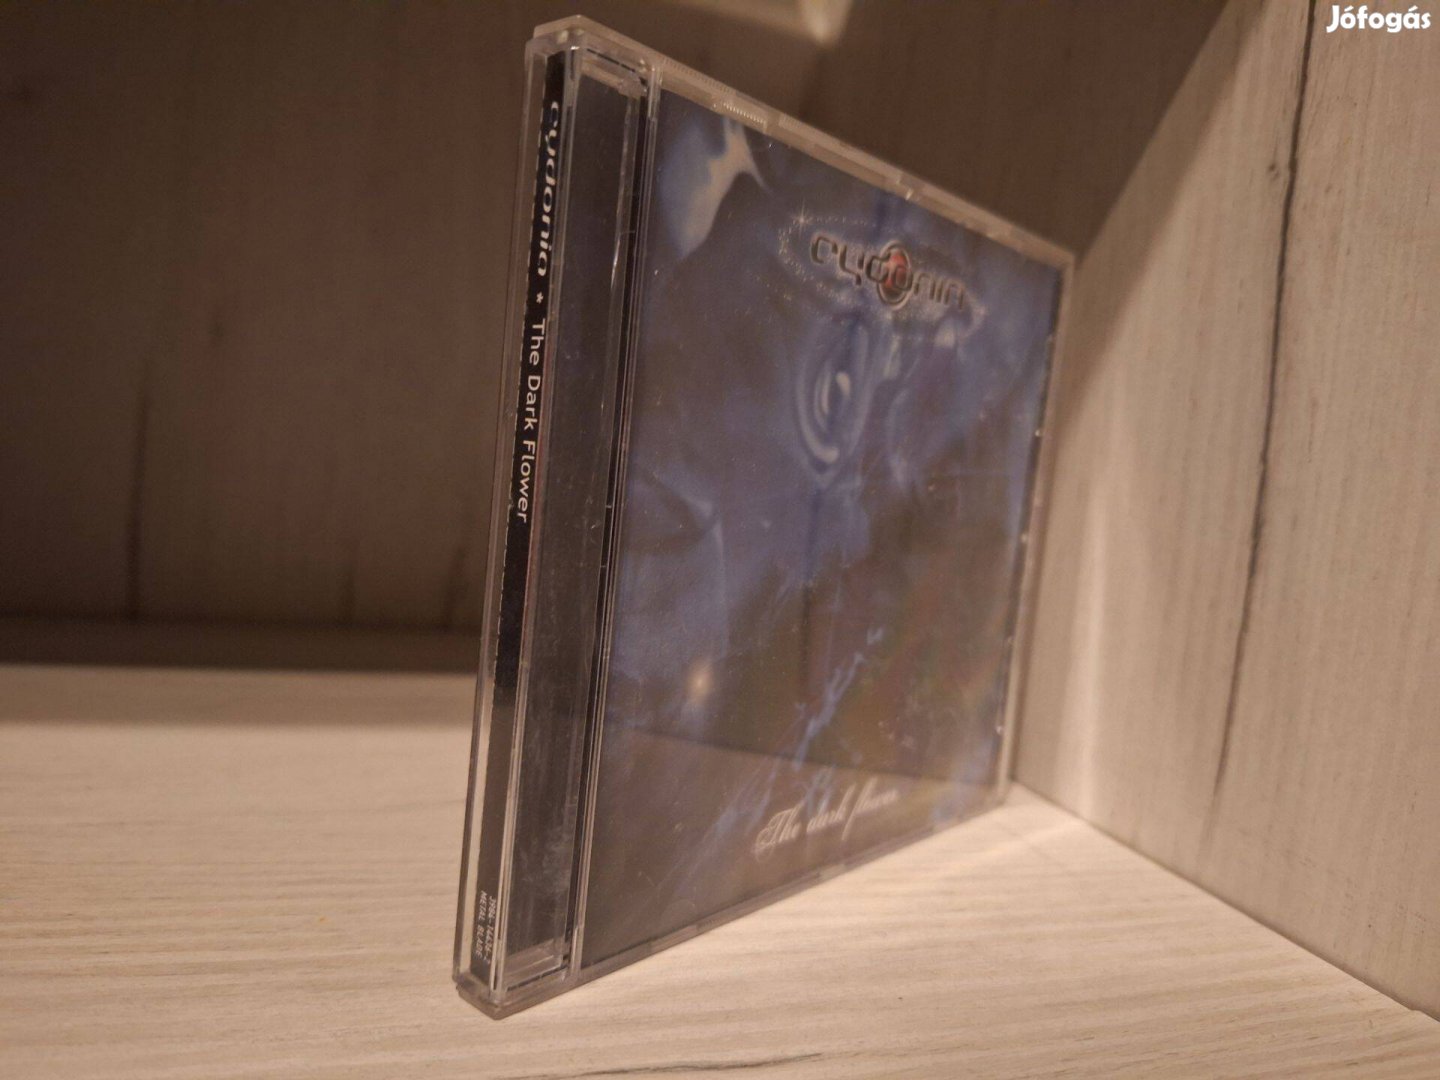 Cydonia - The Dark Flower CD